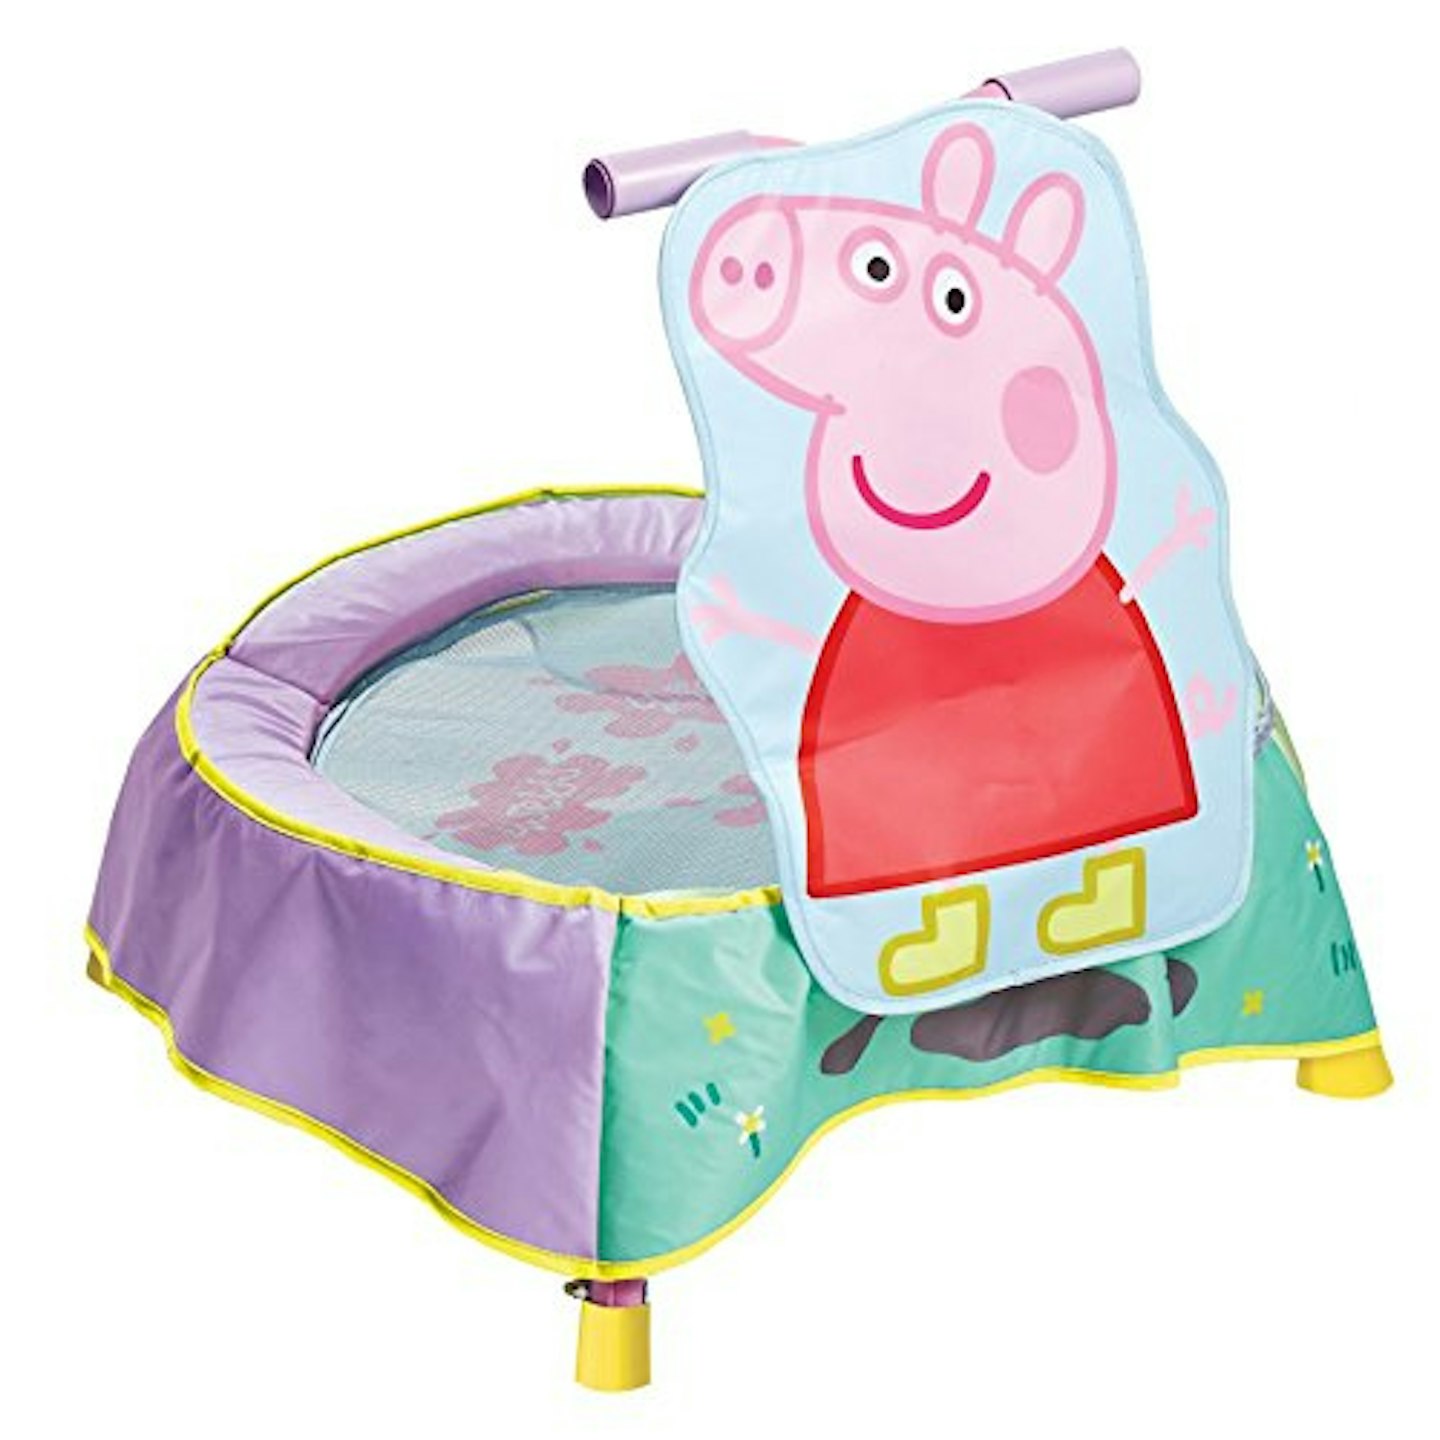 The best toy for developing motor skills: Peppa Pig Indoor Childrens Toddler Trampoline